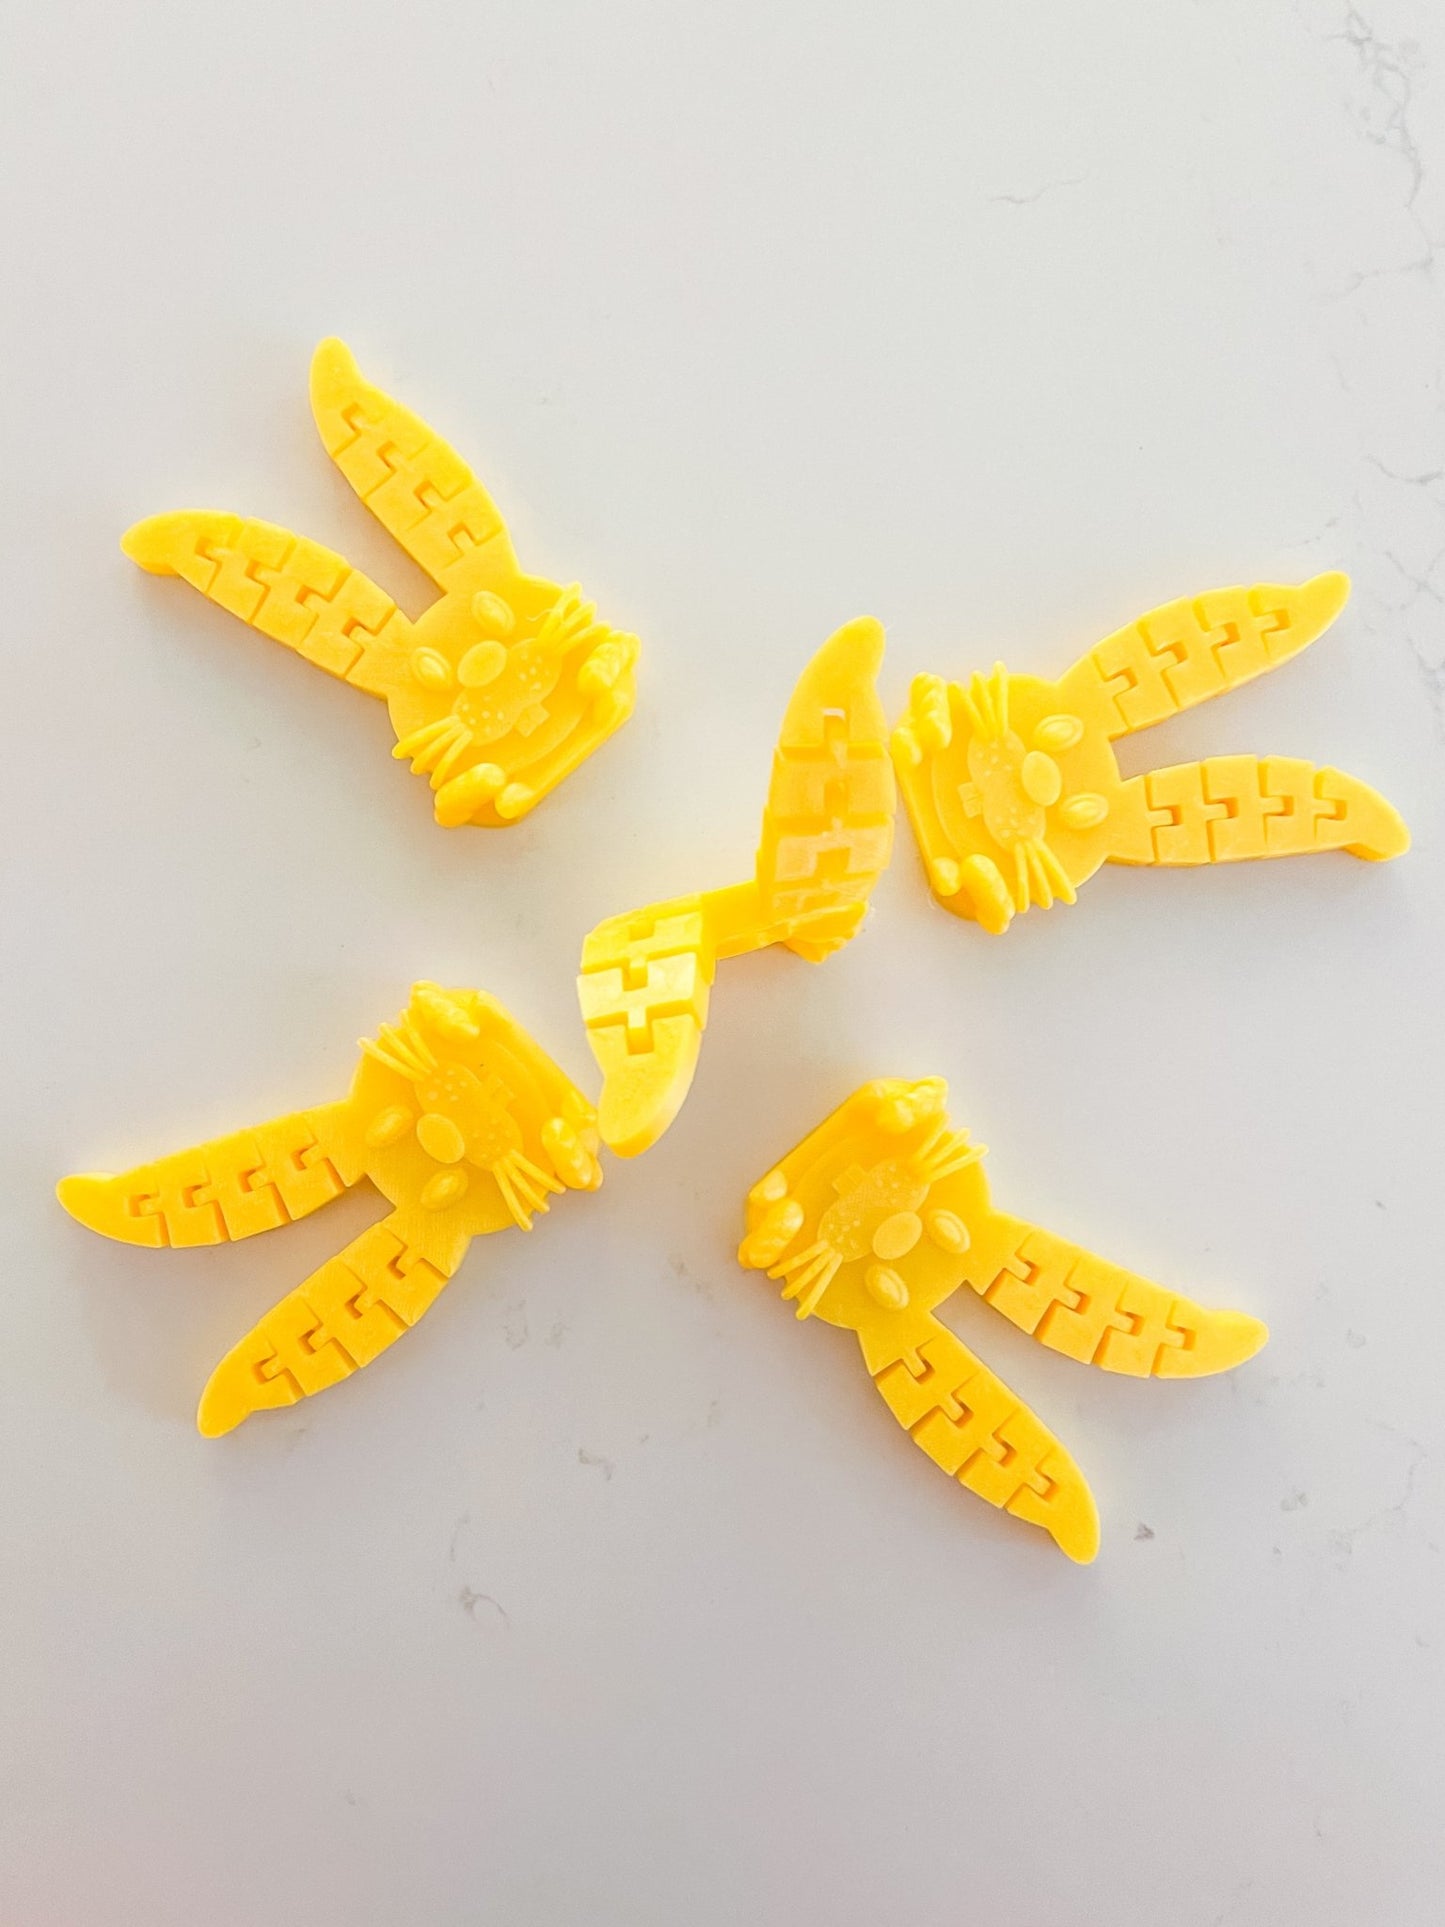 Yellow Glitter Bunny Fidget Toy - Designs by Lauren Ann